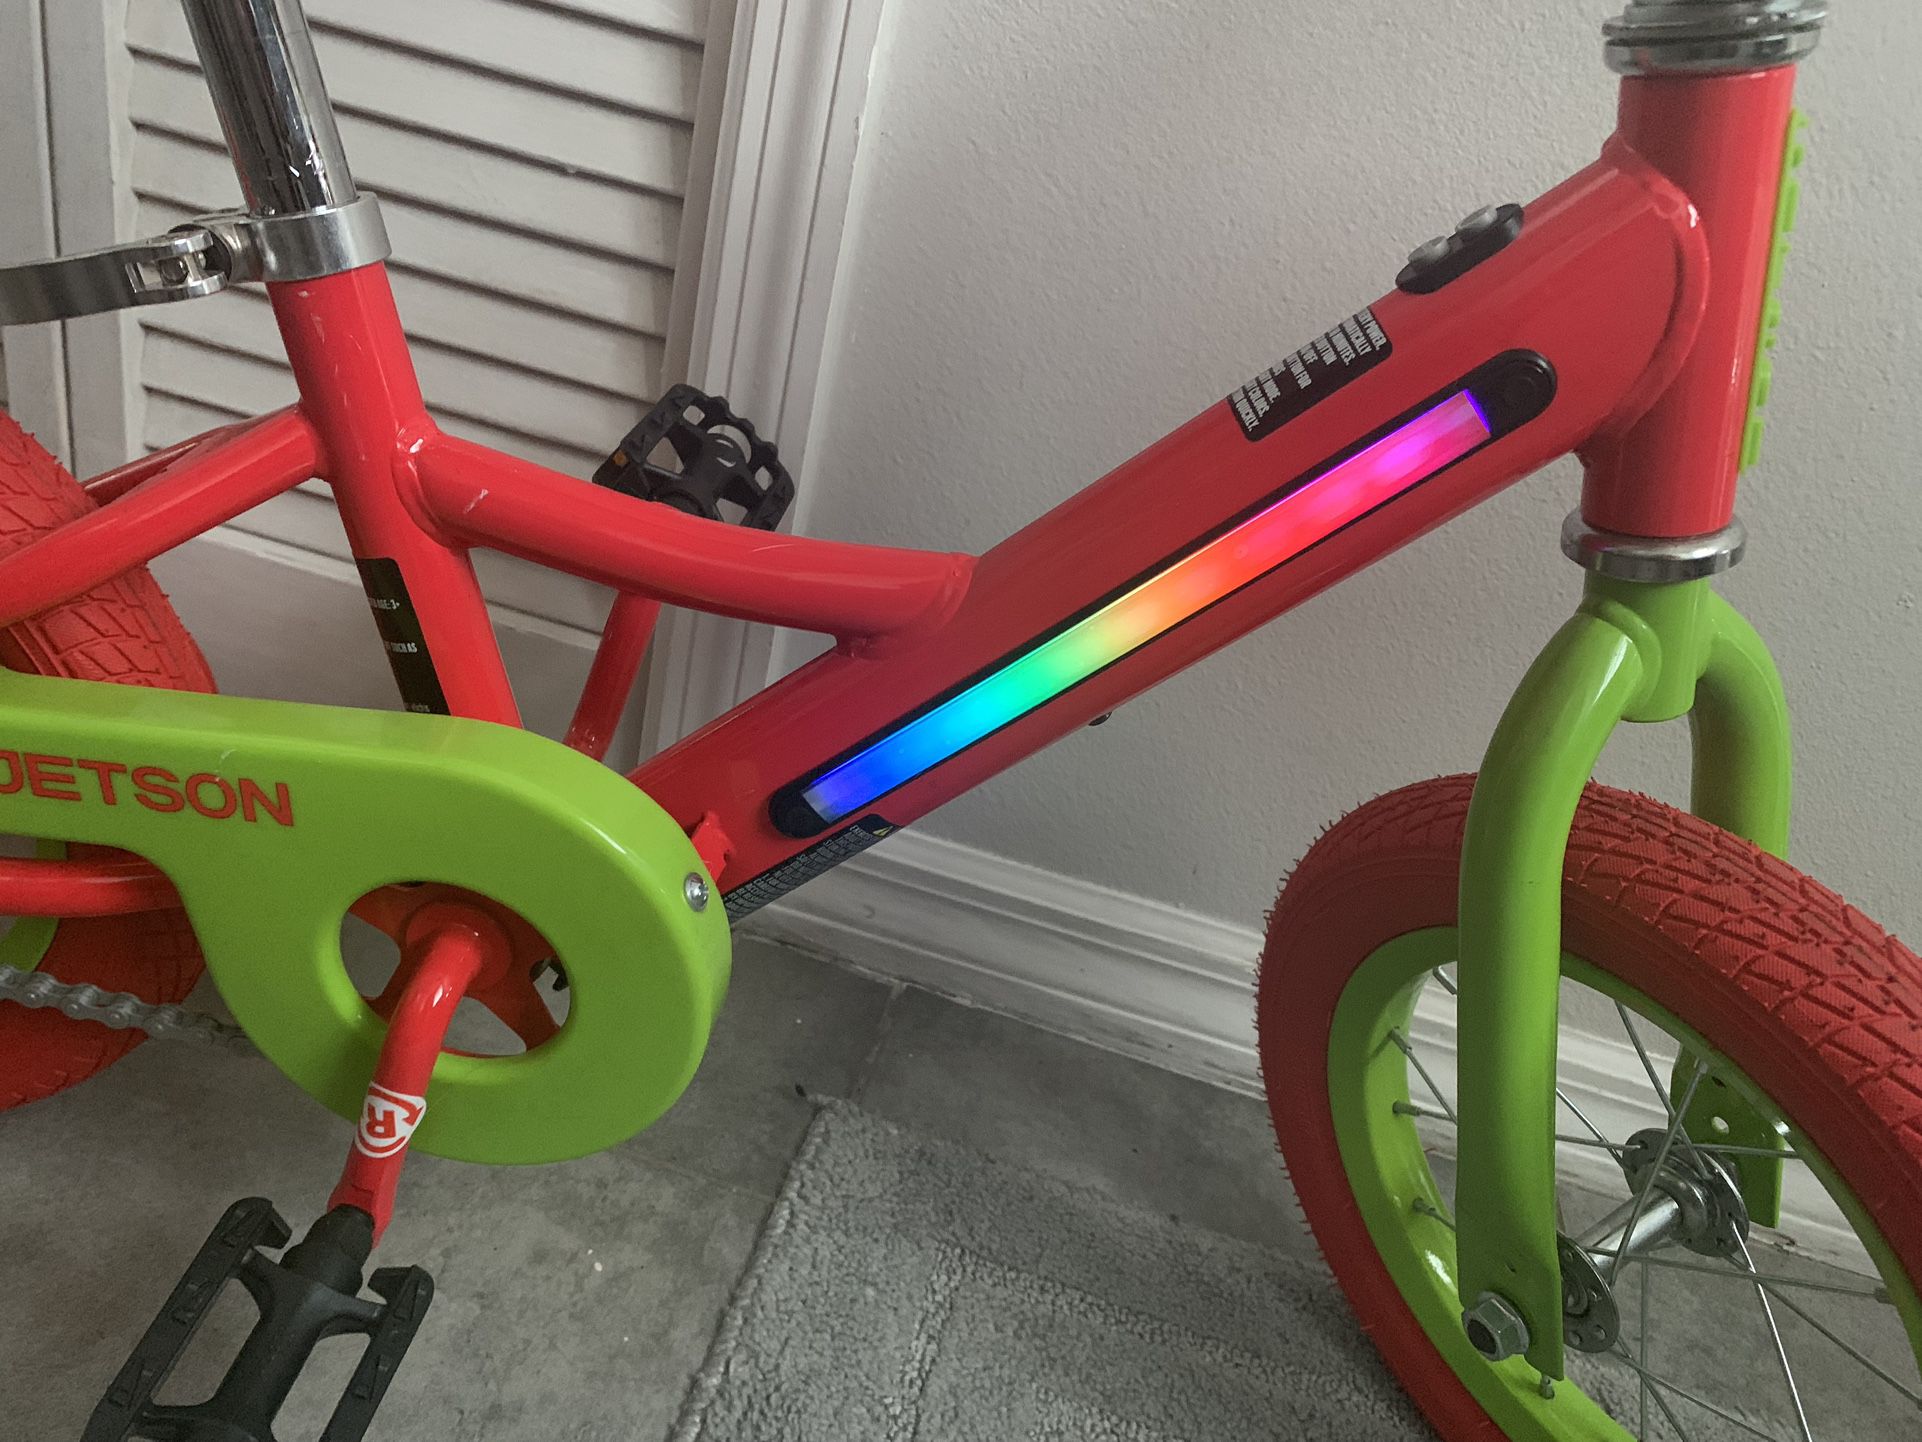 Jetson Light Rider 12" Kids' Light Up Bike - Red/Lime